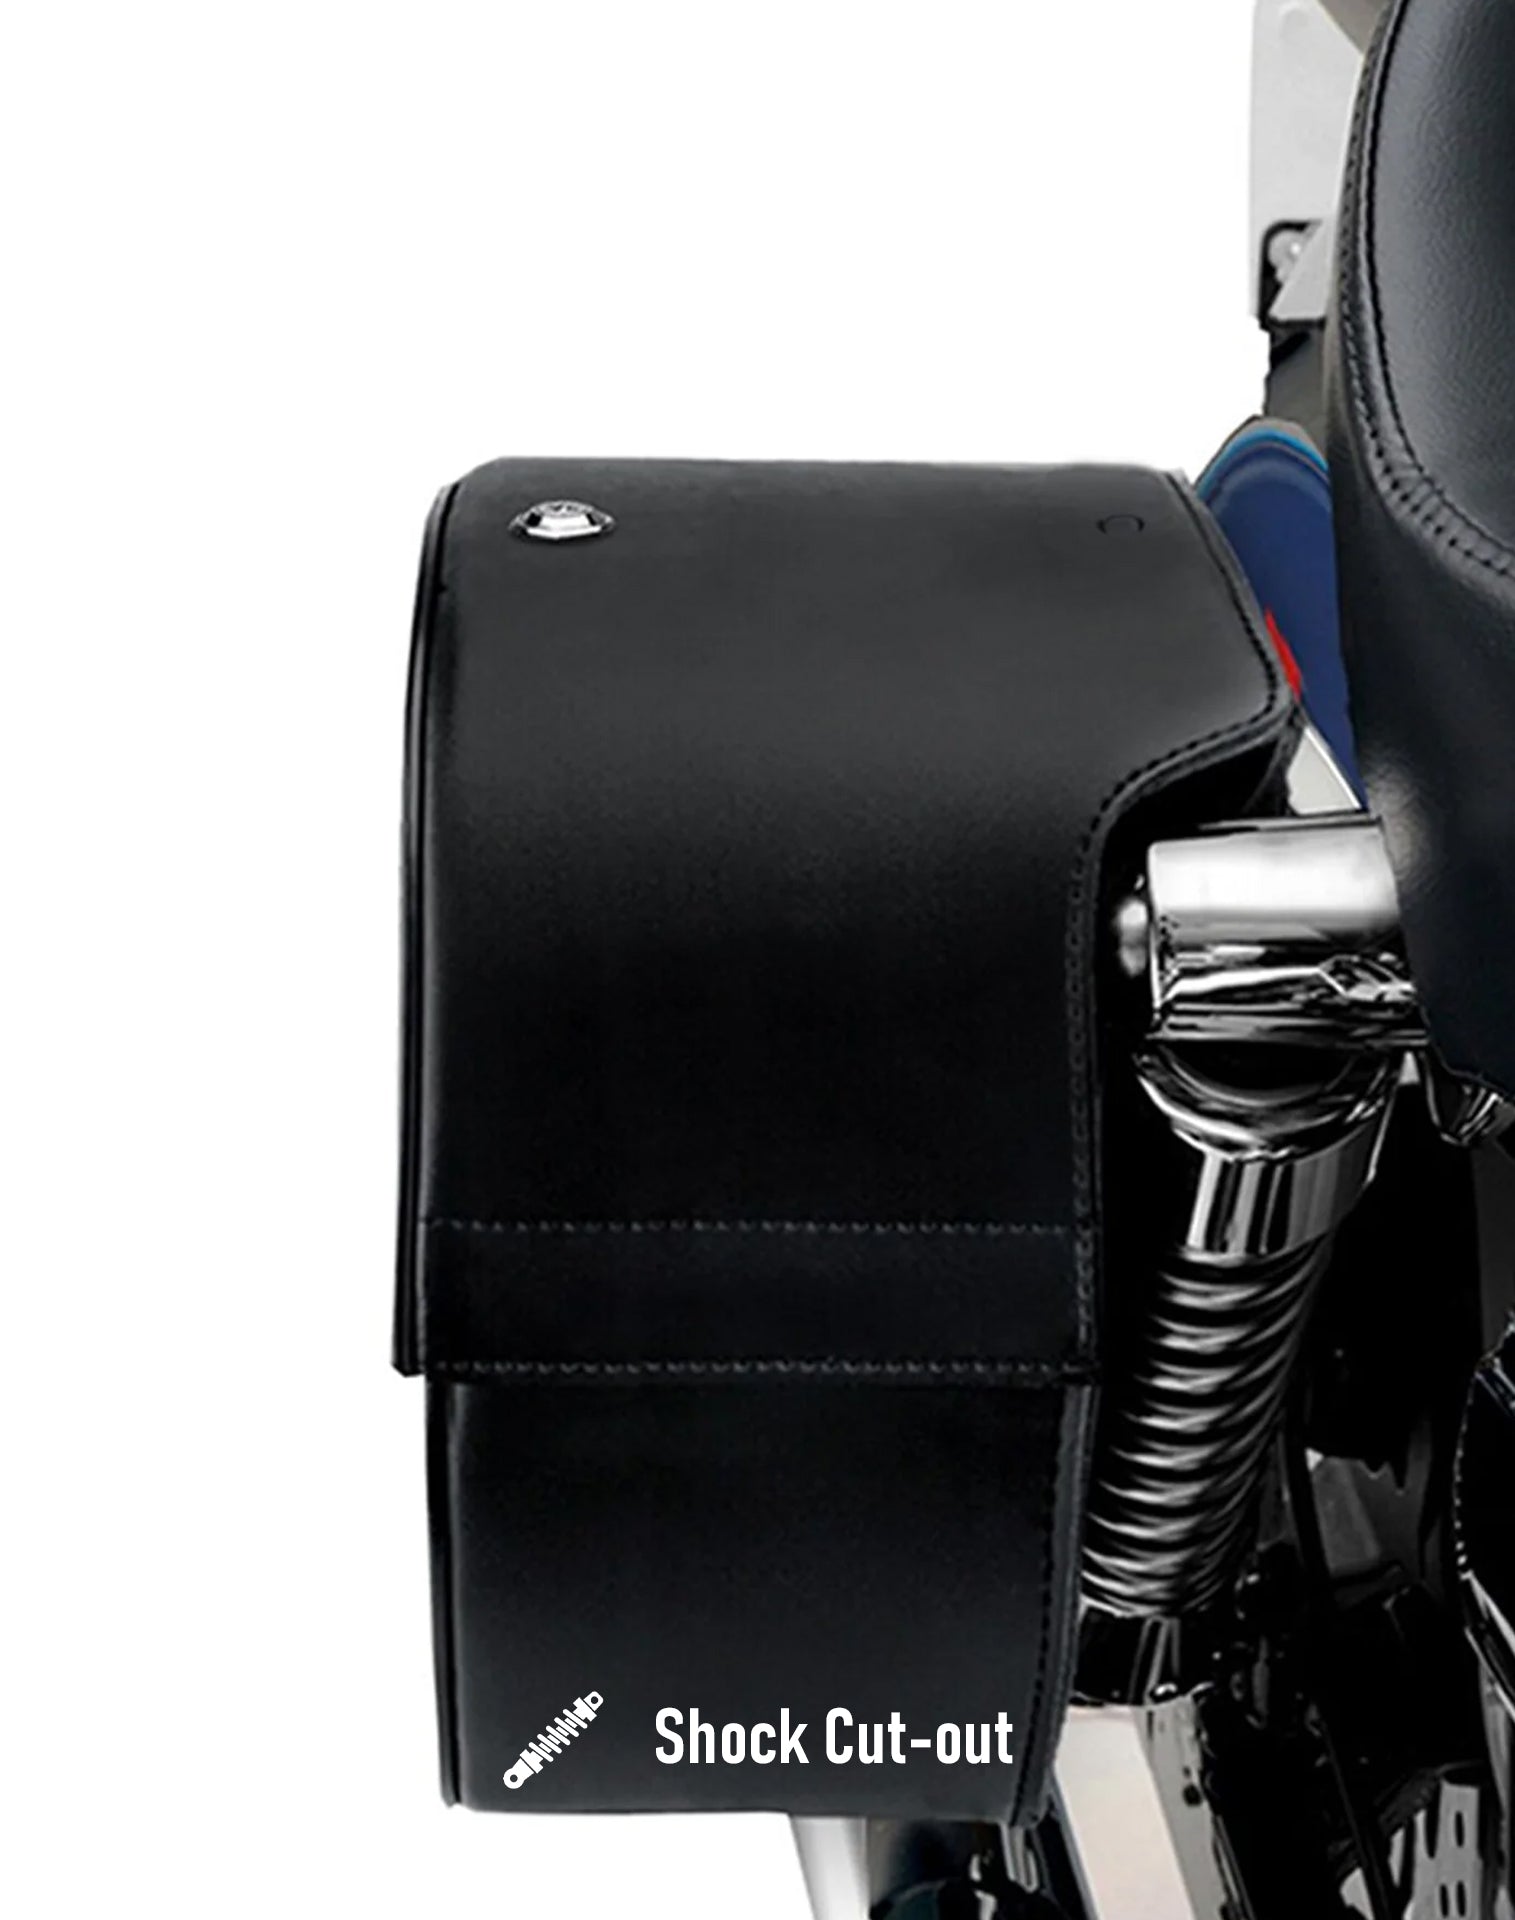 Viking Skarner Large Shock Cut Out Leather Motorcycle Saddlebags For Harley Sportster 72 Xl1200V Hard Shell Construction